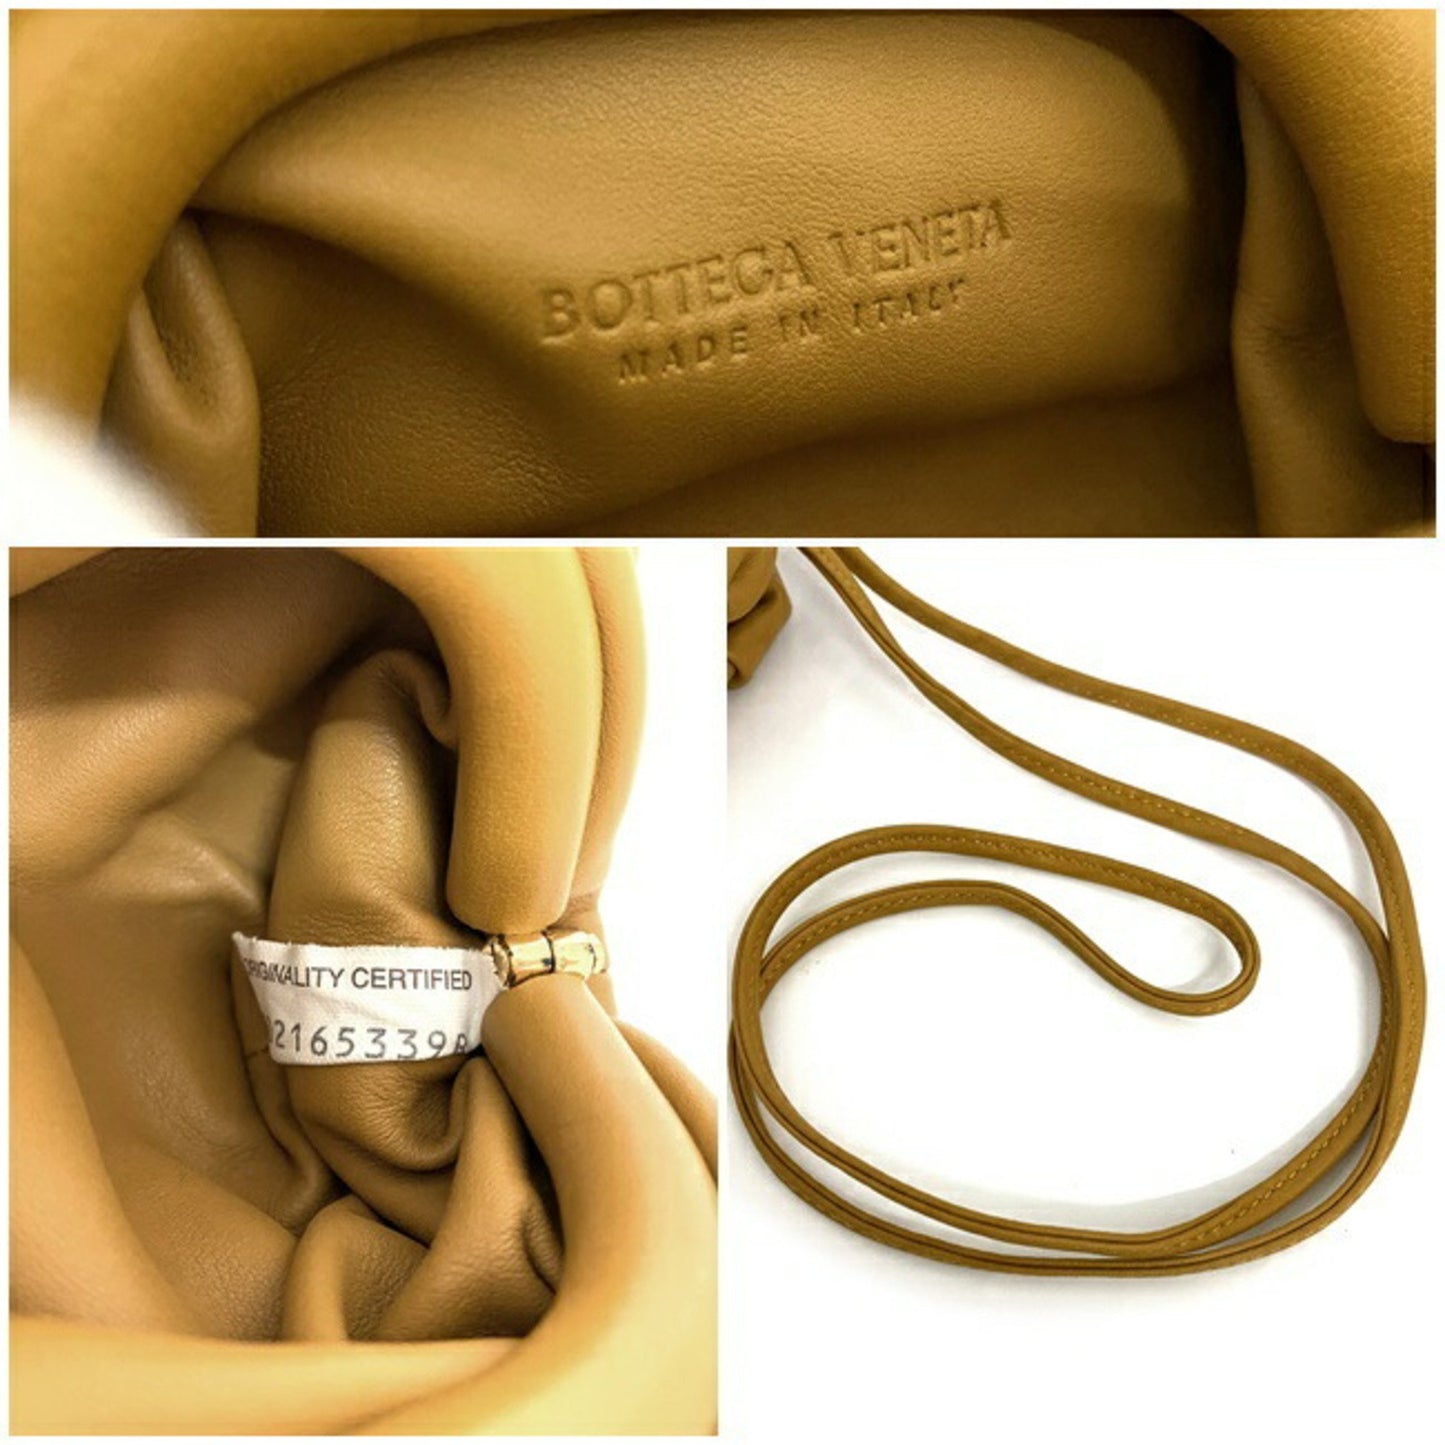 Bottega Veneta Women's Luxury Leather Mini Pouch Accessory in Beige